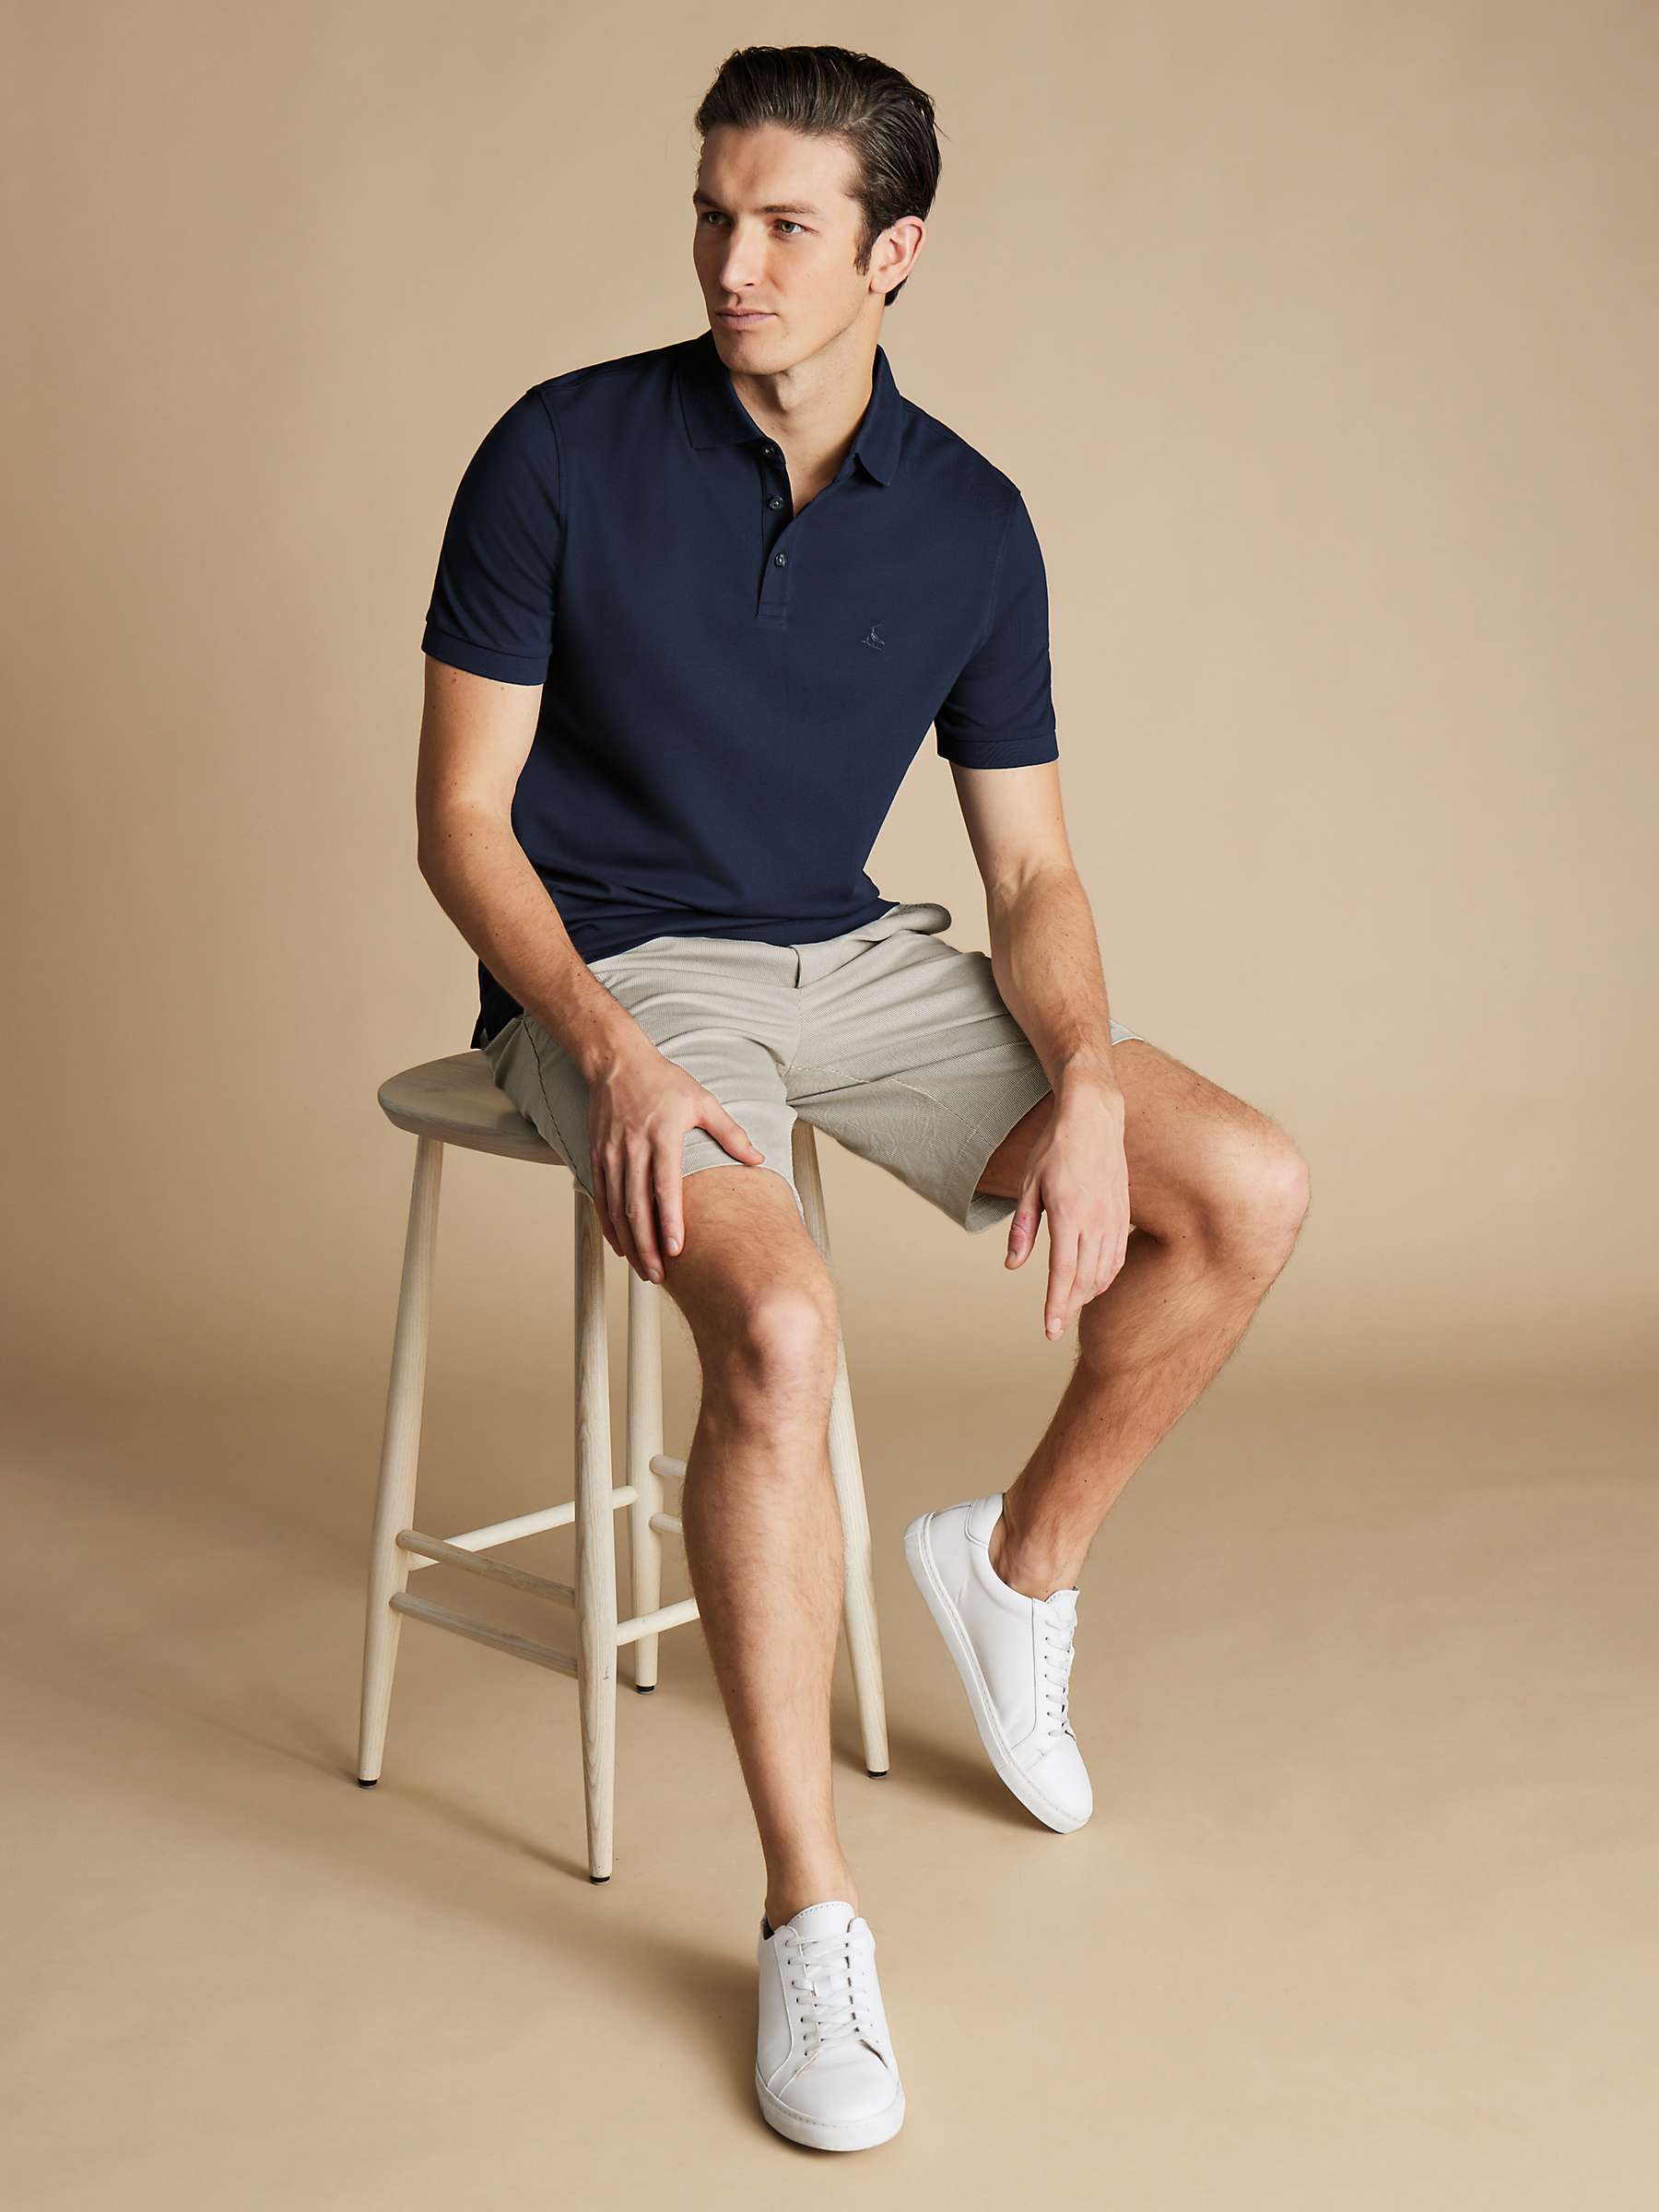 Buy Charles Tyrwhitt Striped Cotton Blend Shorts Online at johnlewis.com